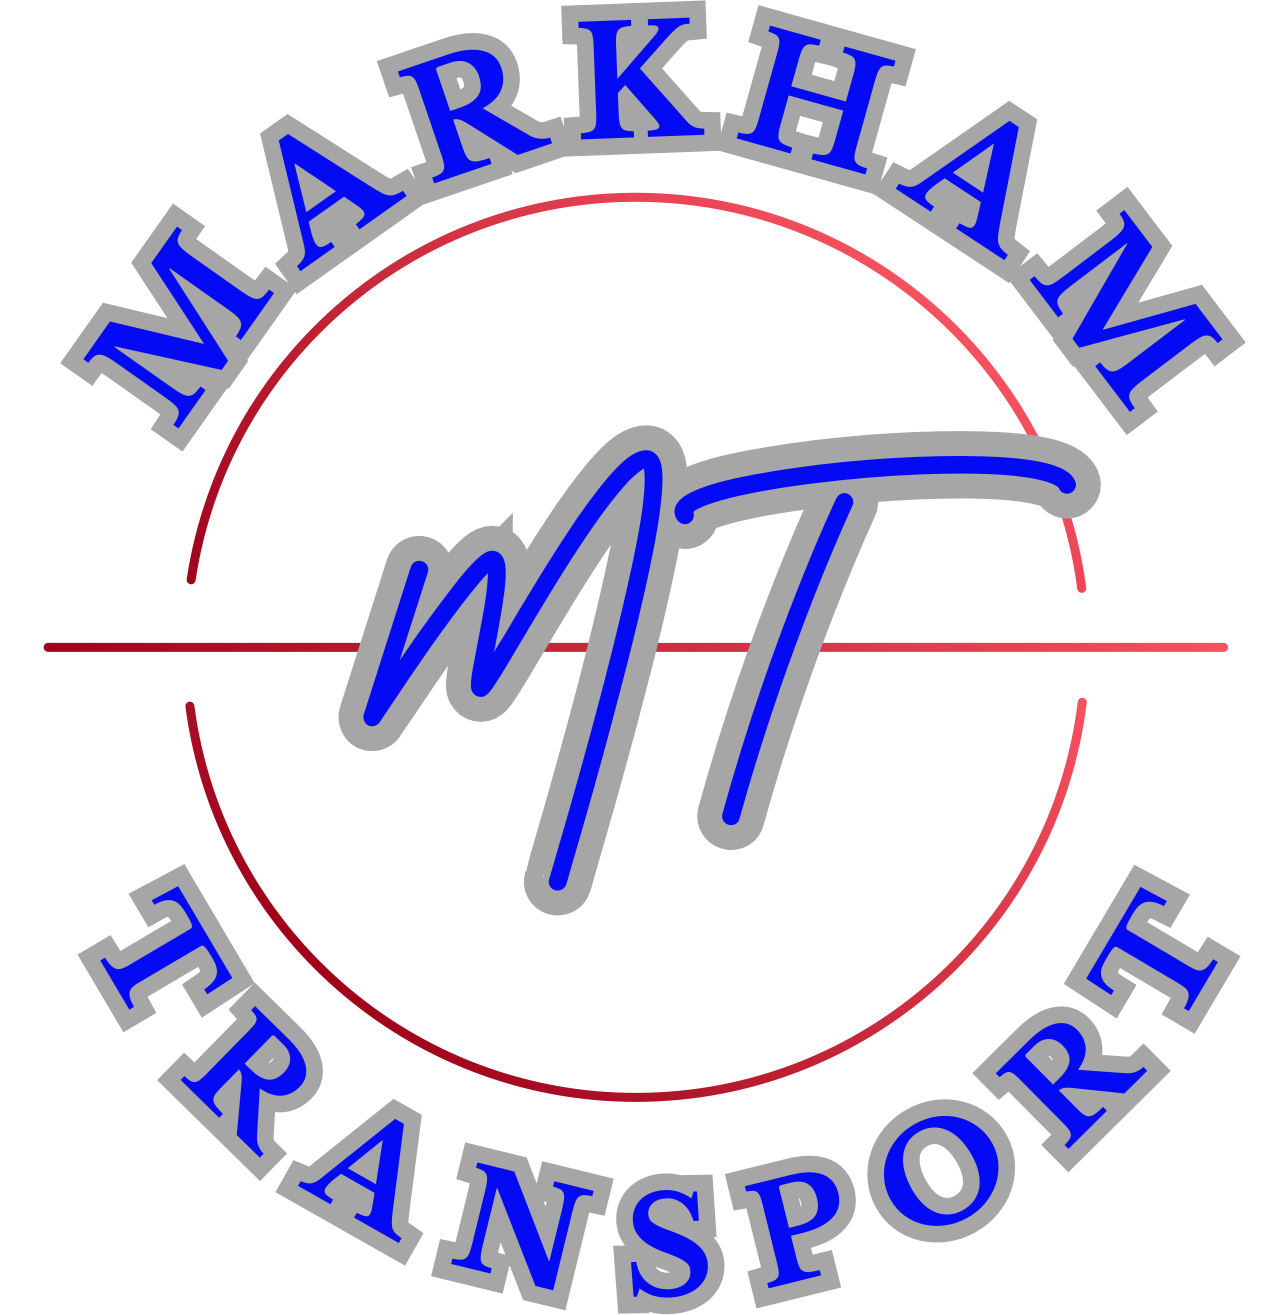 MARKHAM's logo